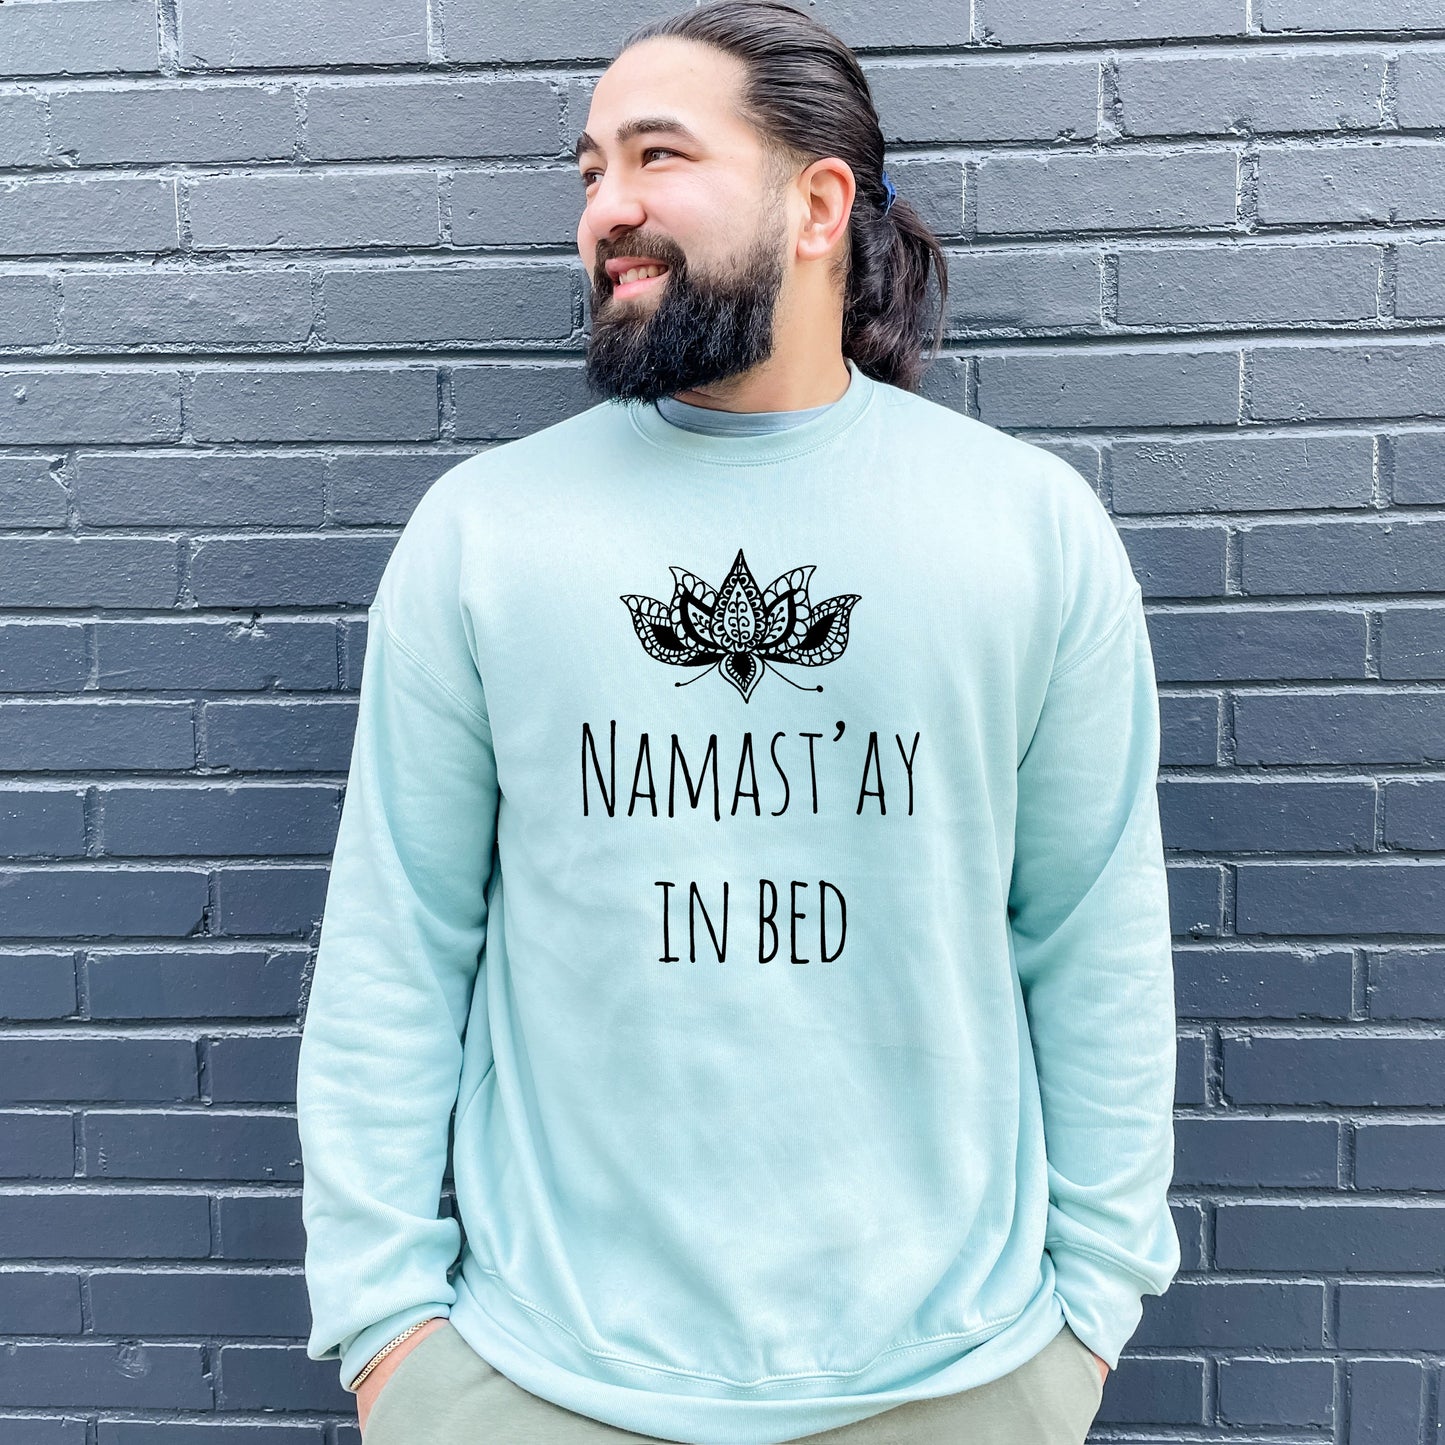 Namast'ay In Bed - Unisex Sweatshirt - Heather Gray or Dusty Blue